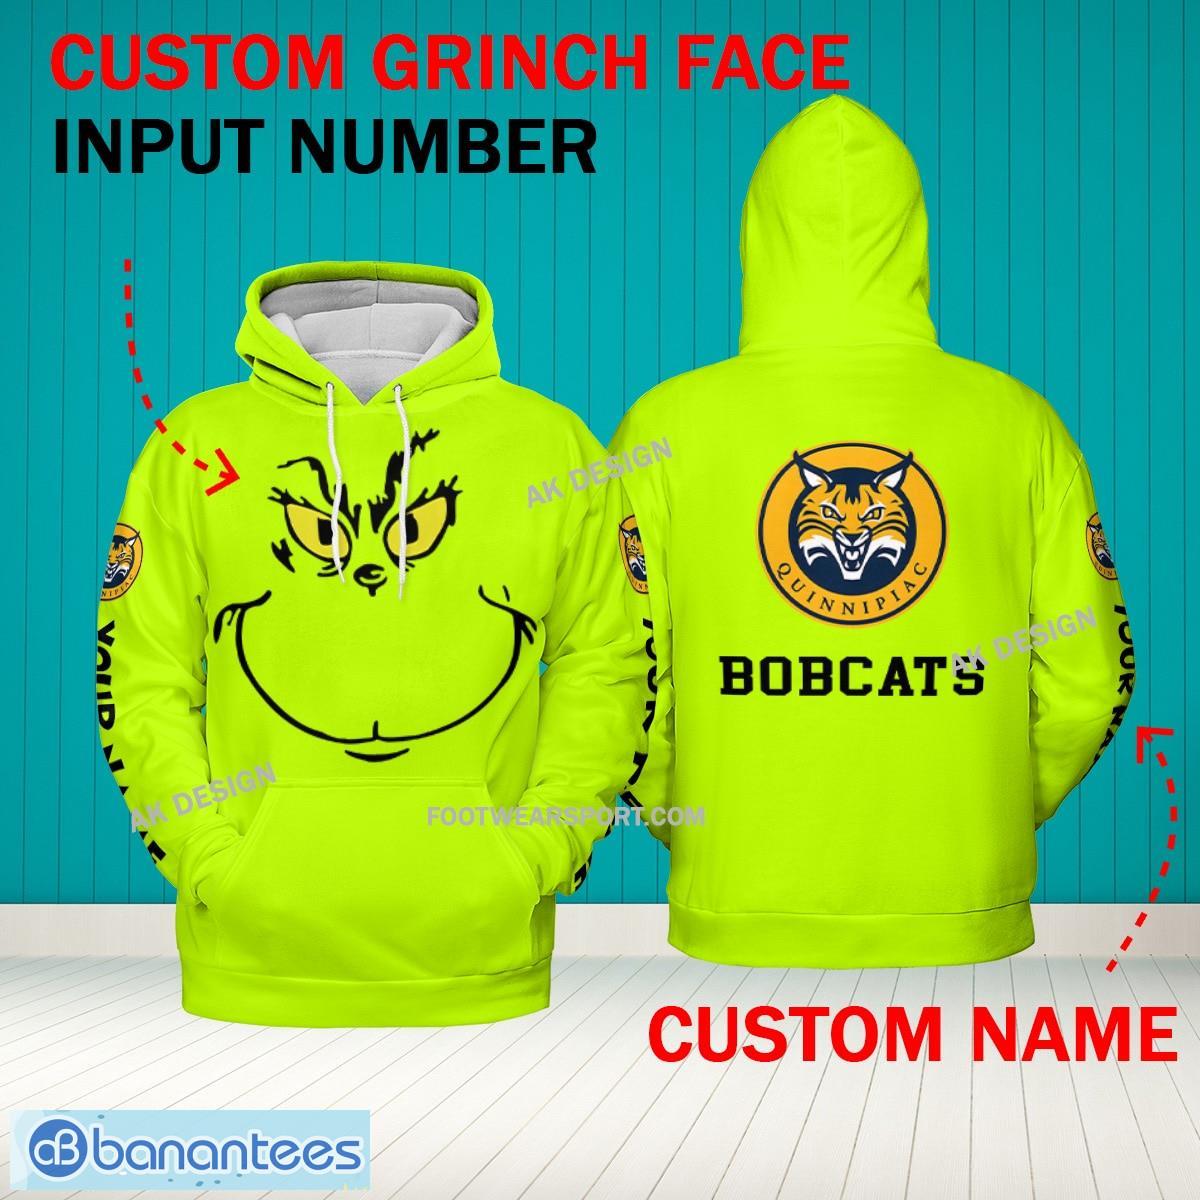 Grinch Face Quinnipiac Bobcats 3D Hoodie, Zip Hoodie, Sweater Green AOP Custom Number And Name - Grinch Face NCAA2 Quinnipiac Bobcats 3D Hoodie